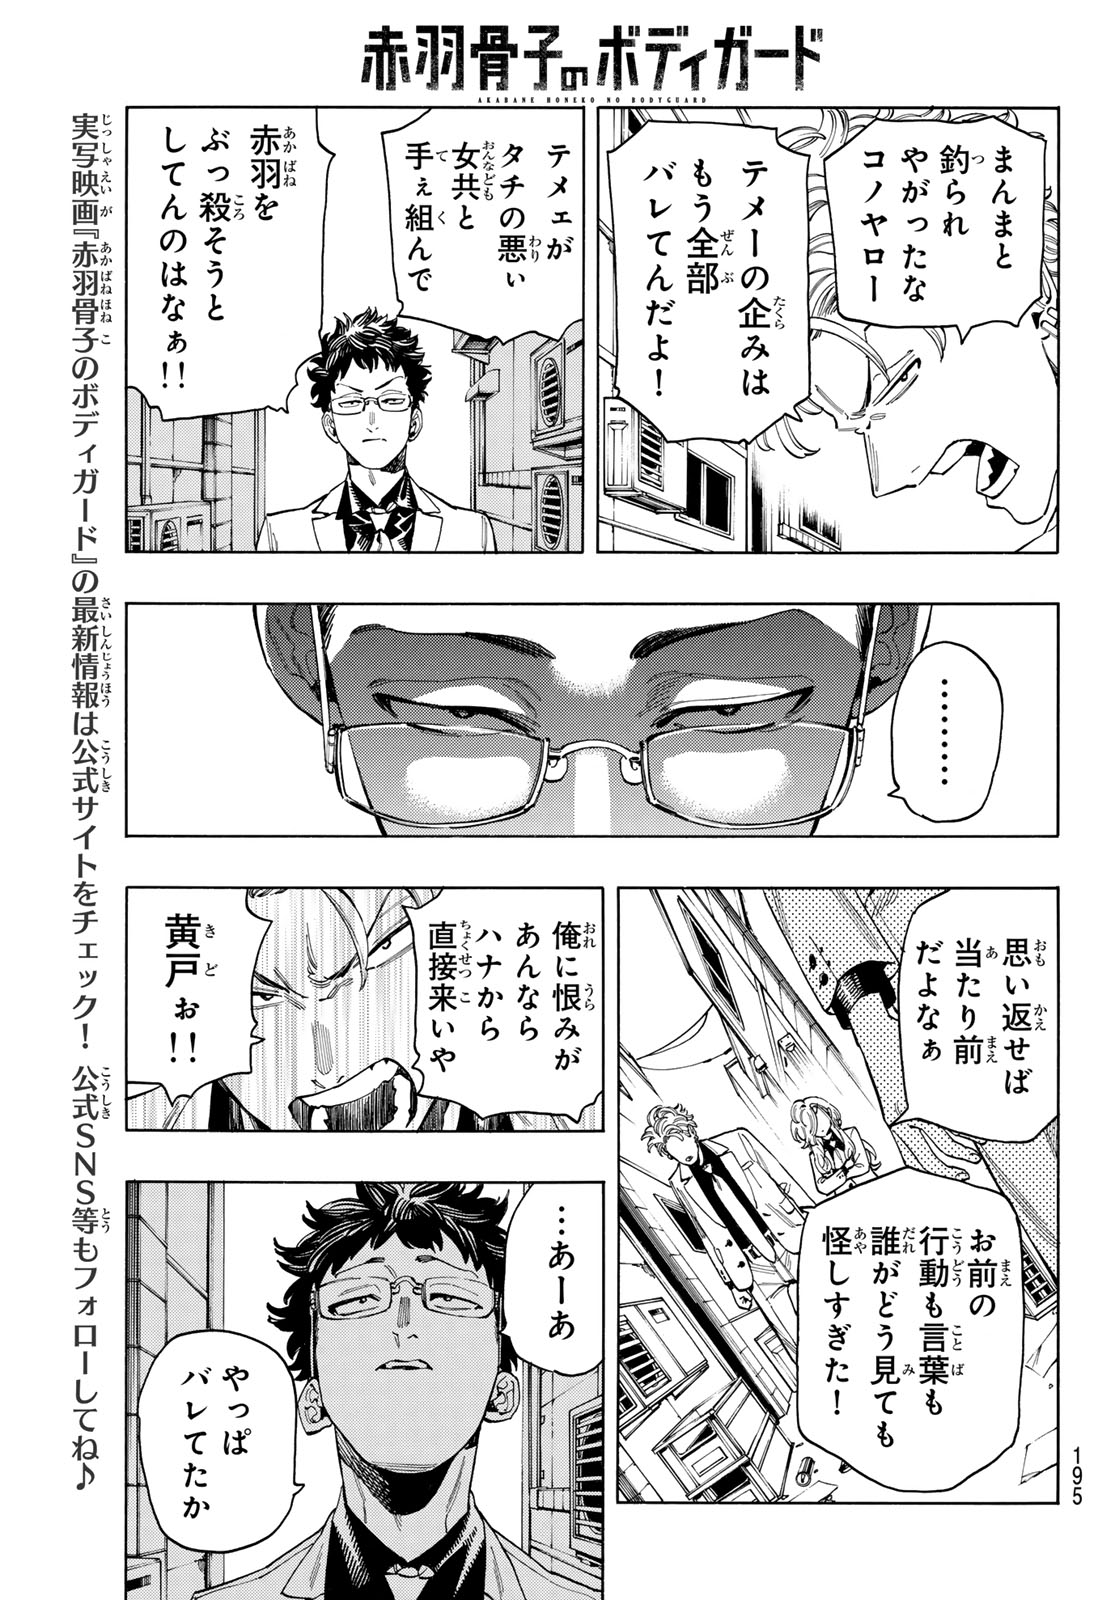 Akabane Honeko no Bodyguard - Chapter 78 - Page 17